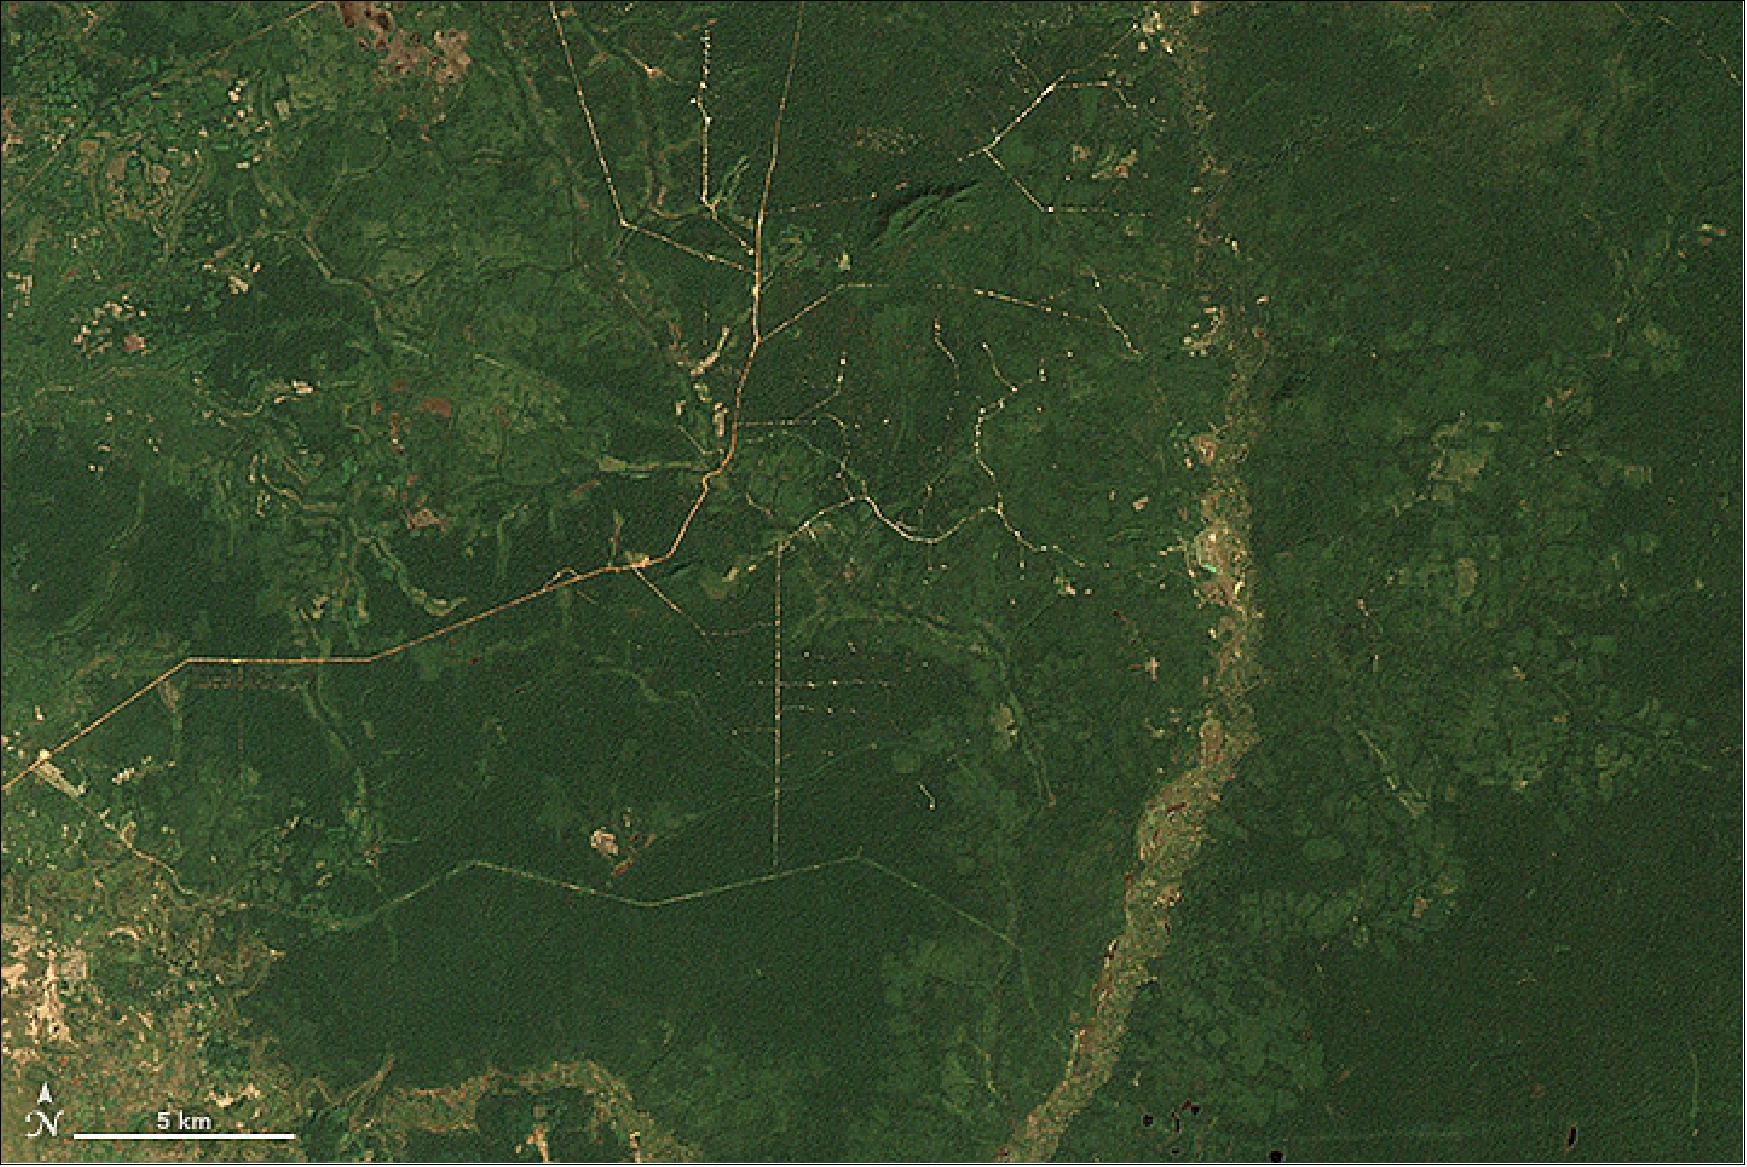 Figure 35: Landsat-7 ETM+ image of Cambodia, acquired on December 31, 2000 (image credit: NASA Earth Observatory, image by Joshua Stevens, using Landsat data from the USGS)